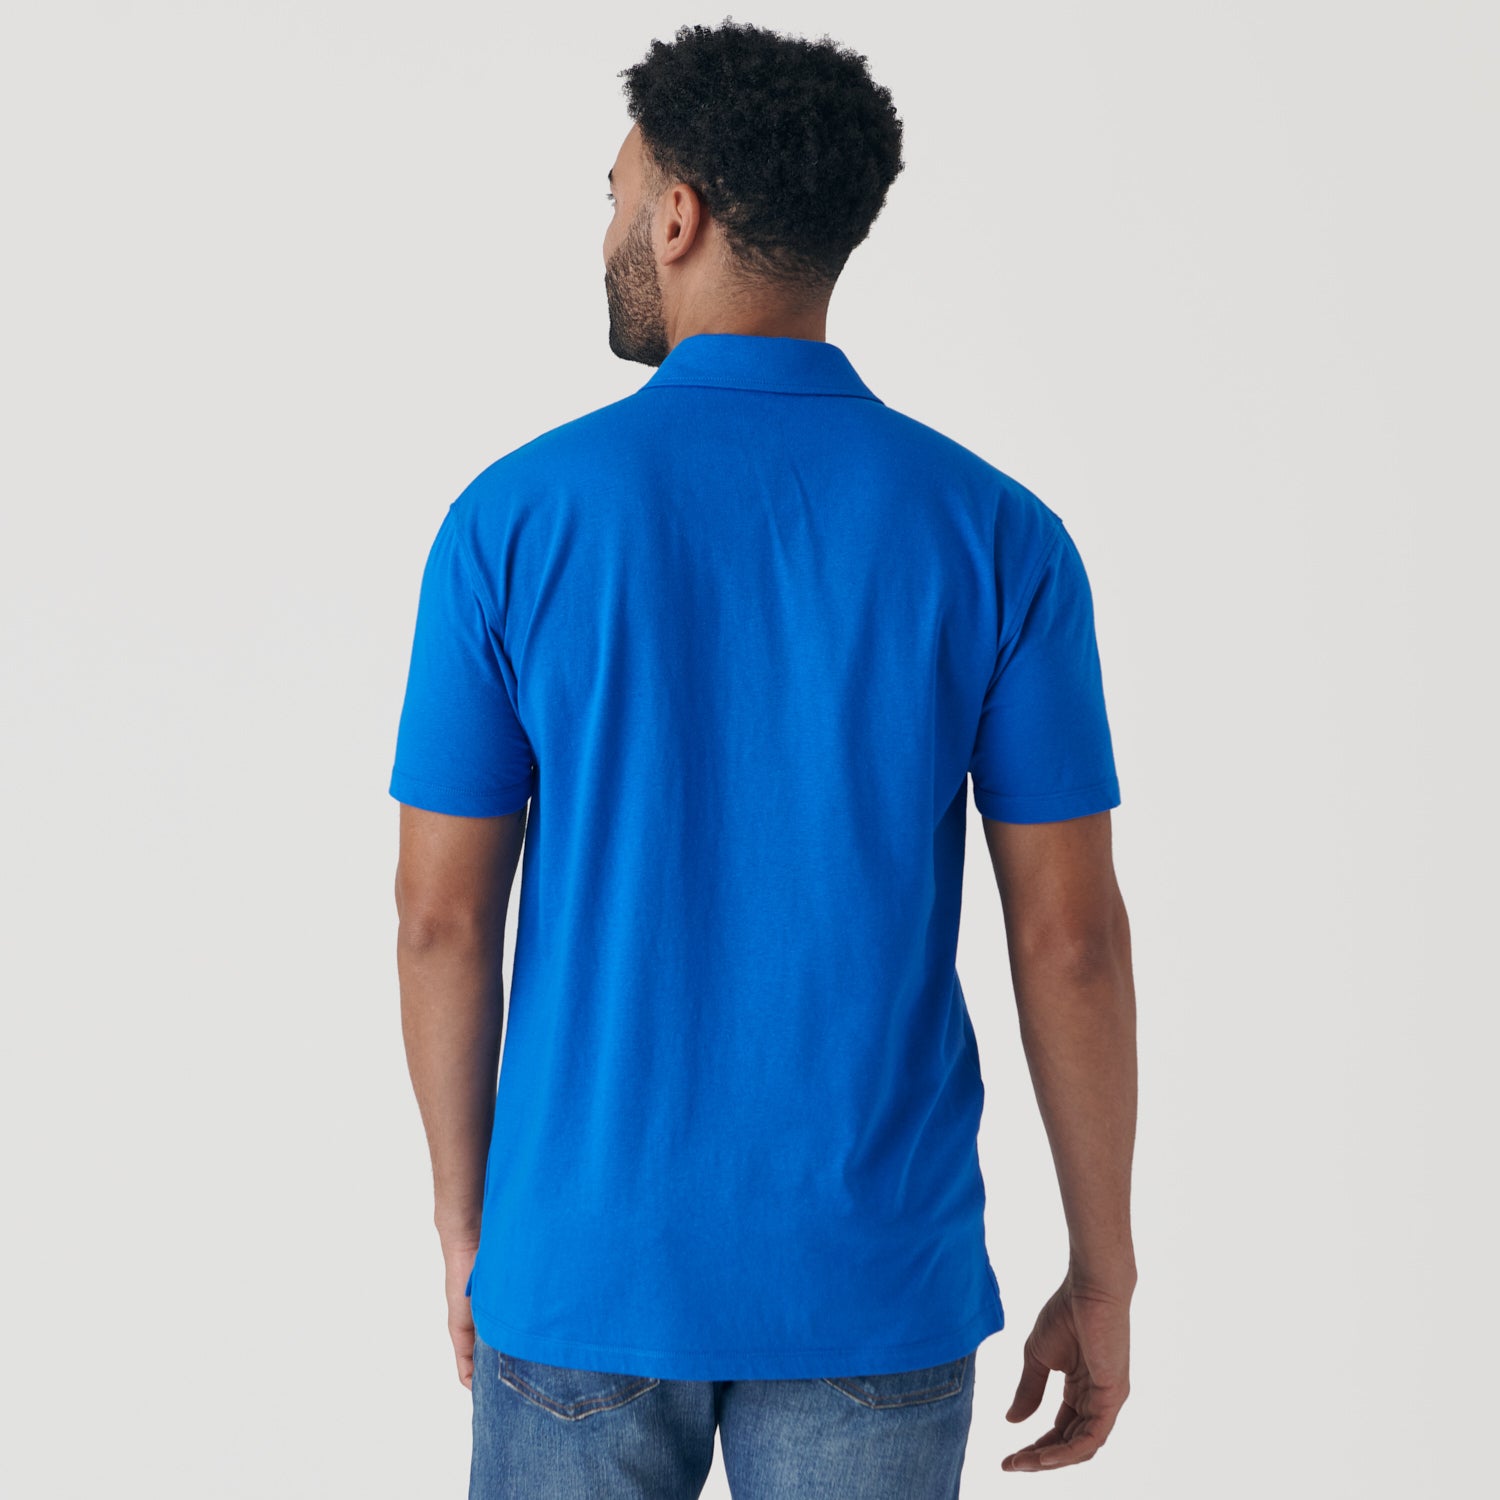 True Classic Electric Blue Polo Shirt | Cotton Blend | Athletic Cut | 2XL / 2XL